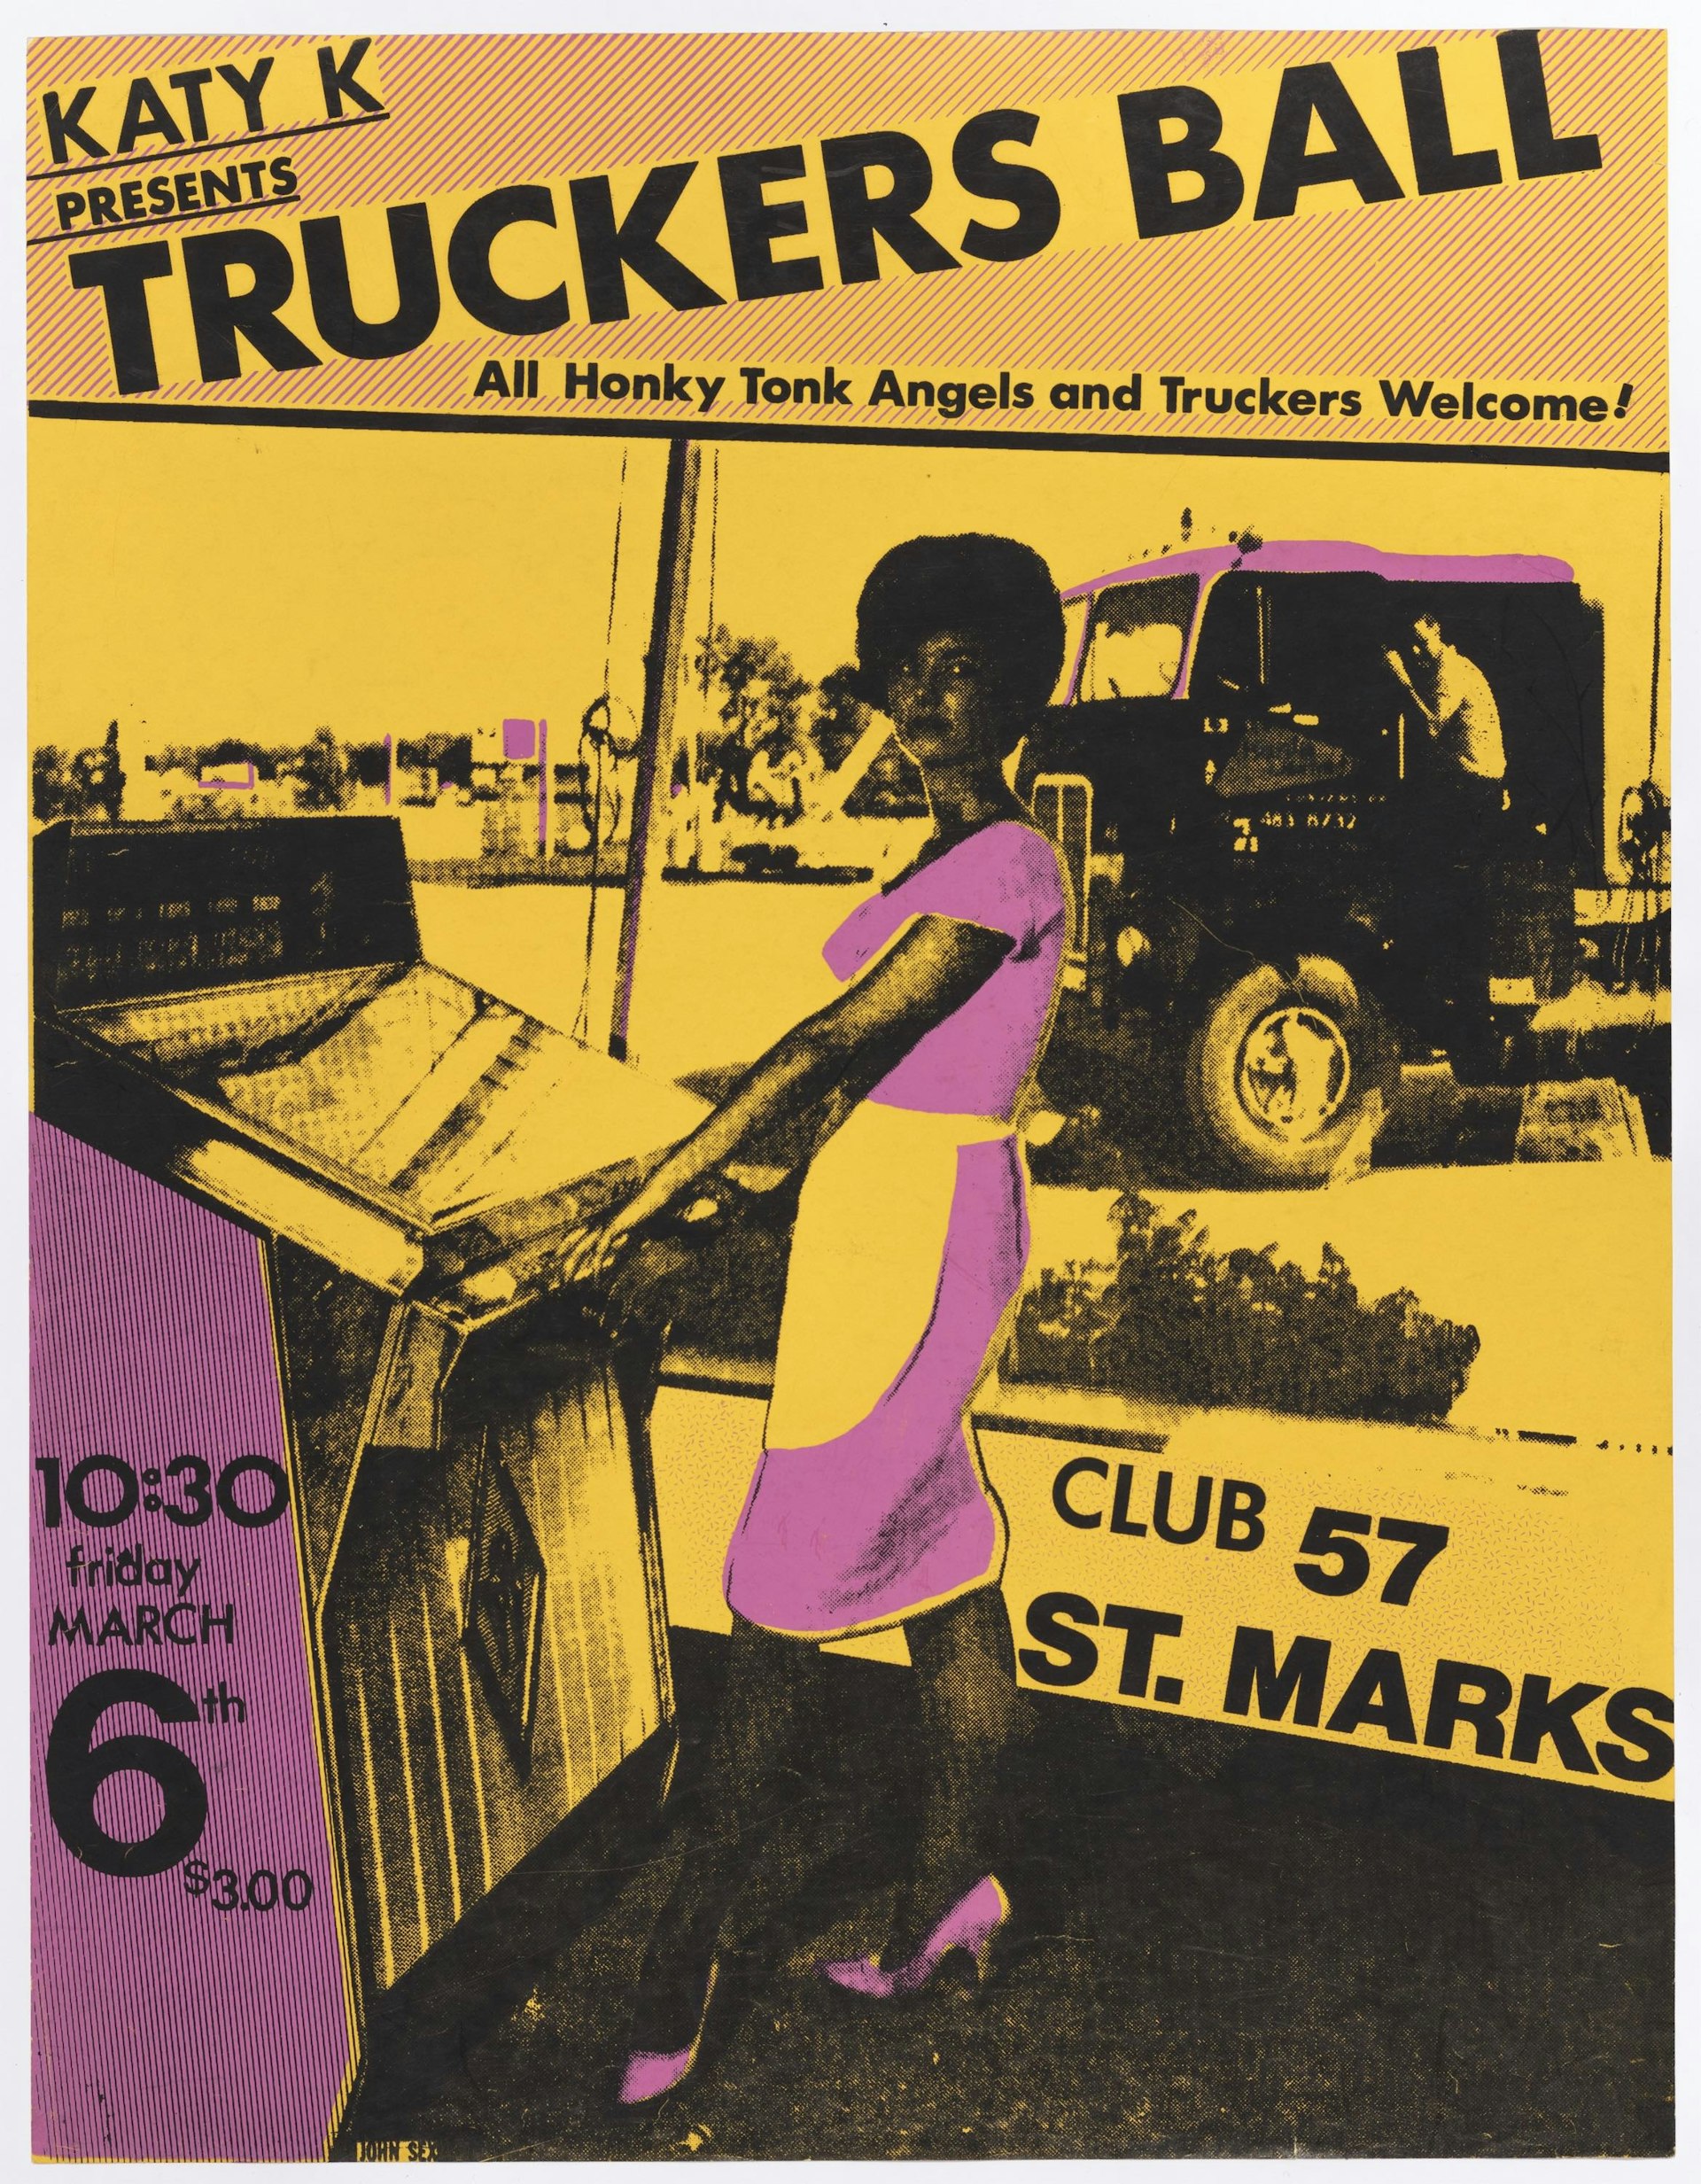 John Sex (American, 1956–1990). Truckers Ball, 1981. Silkscreen. The Museum of Modern Art, New York. Department of Film Special Collections